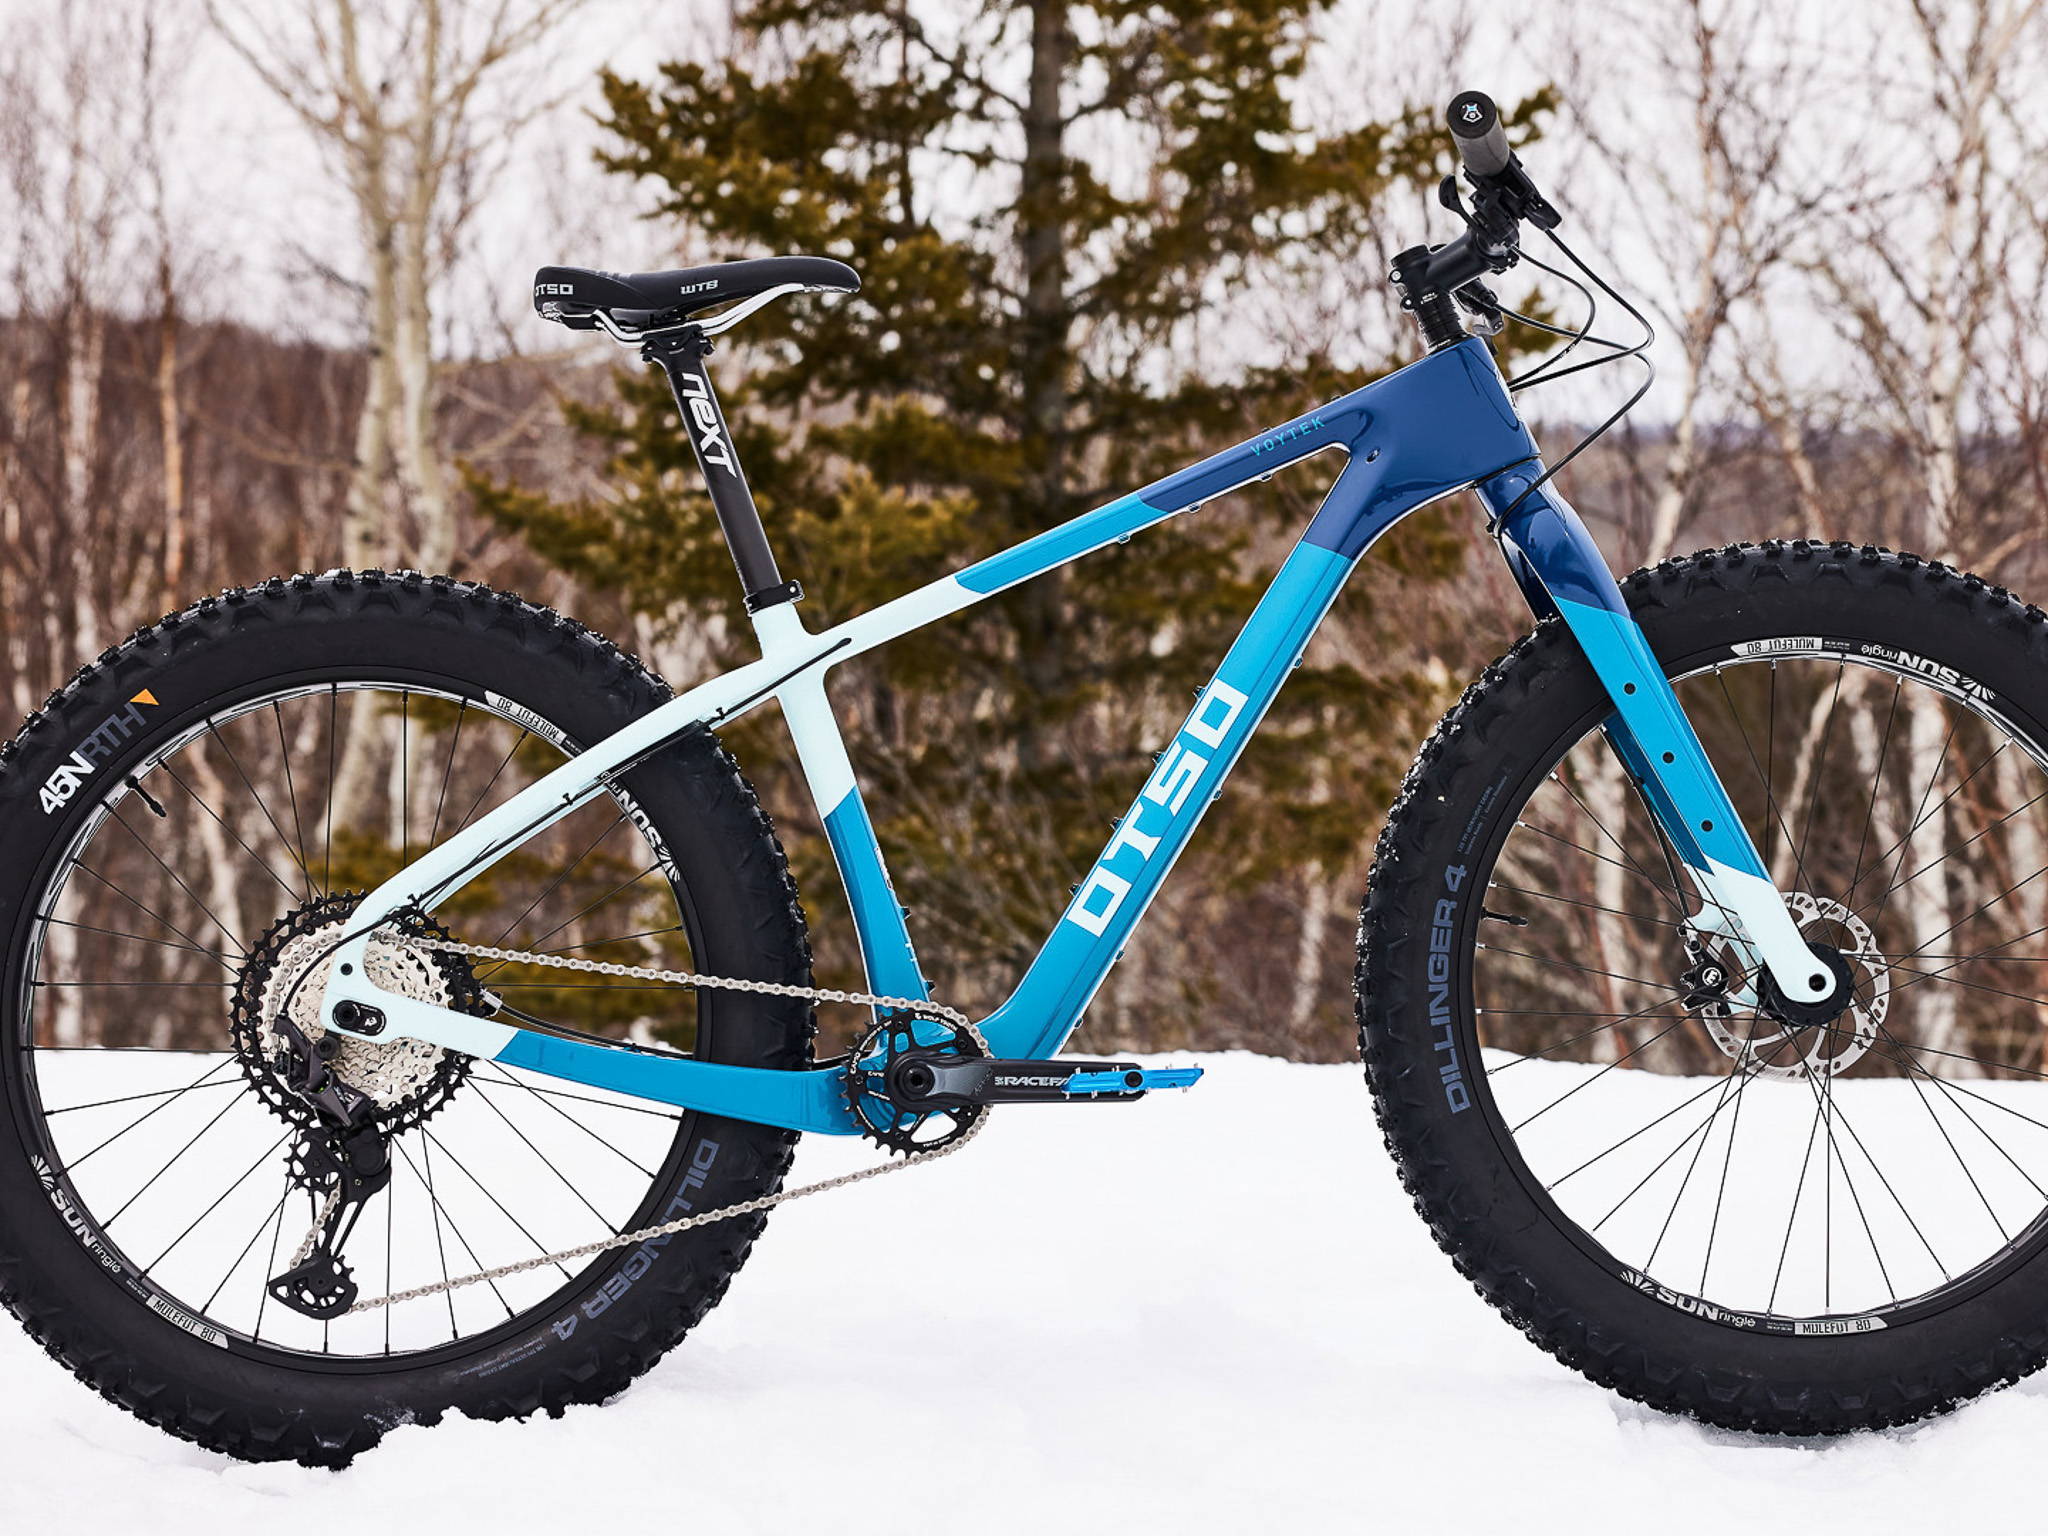 Blue Otso Voytek 2 fat bike pictured on snow in the woods.